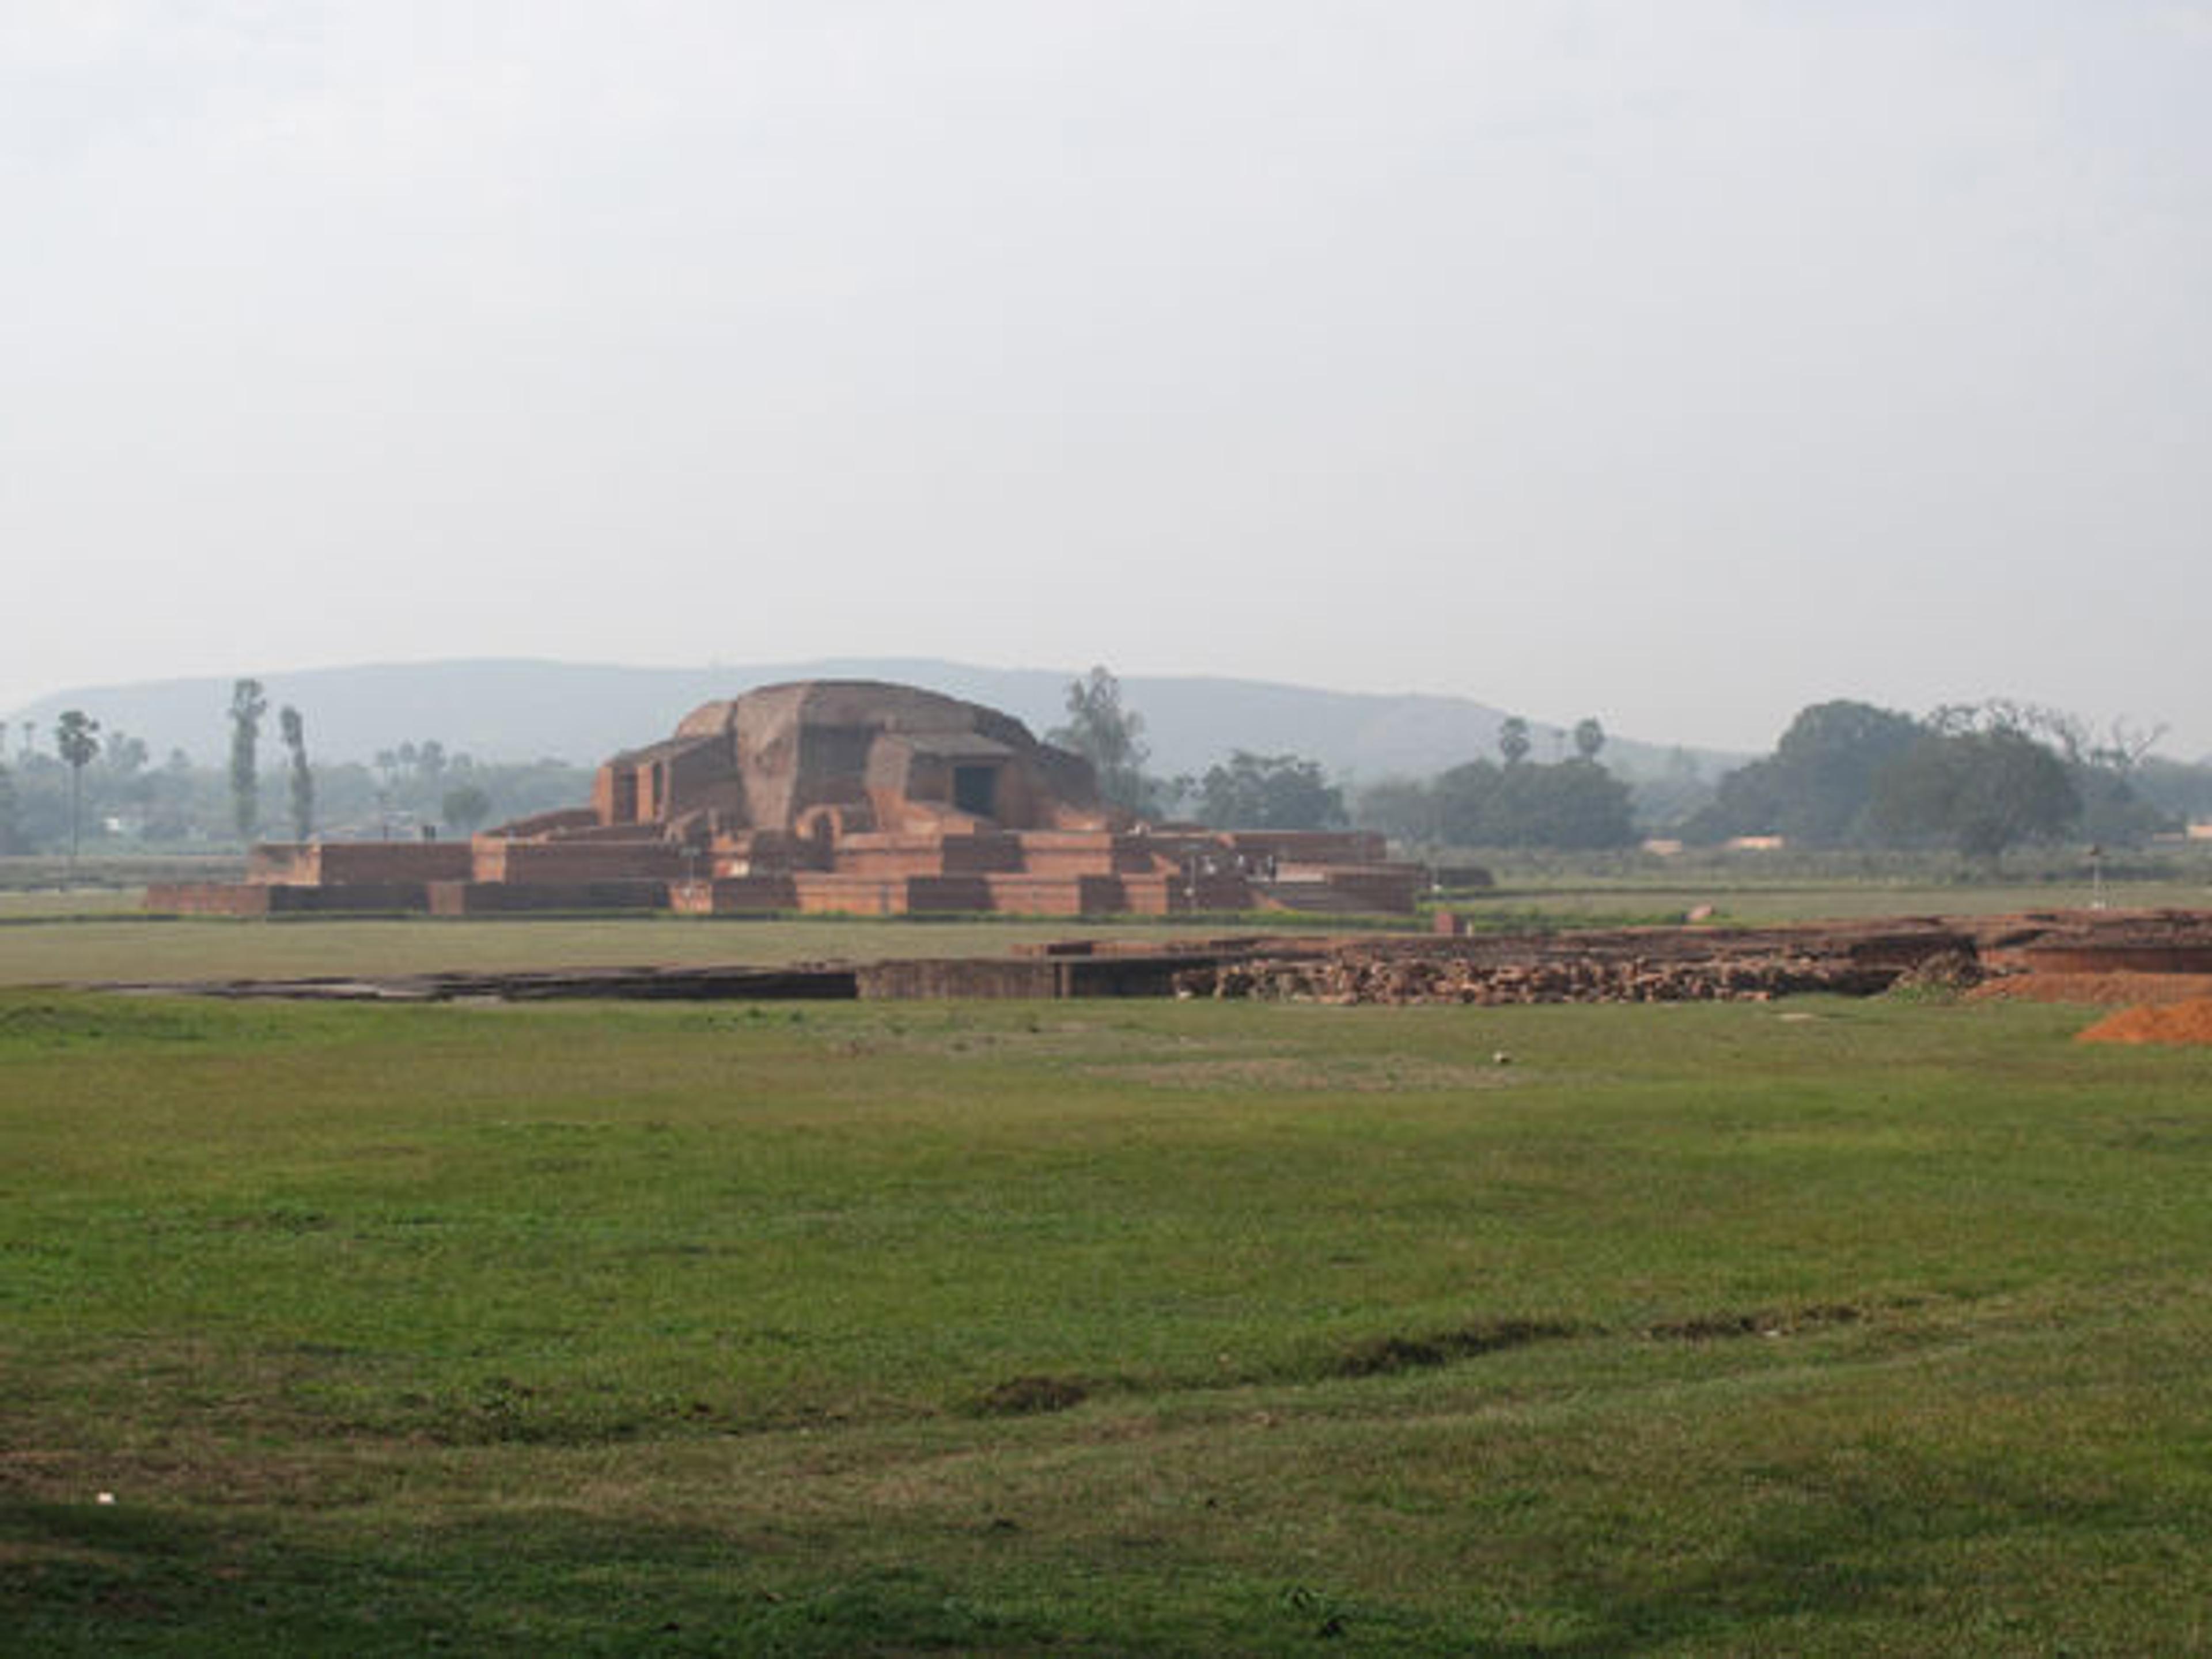 Vikramashila monastery, central temple with directional shrines